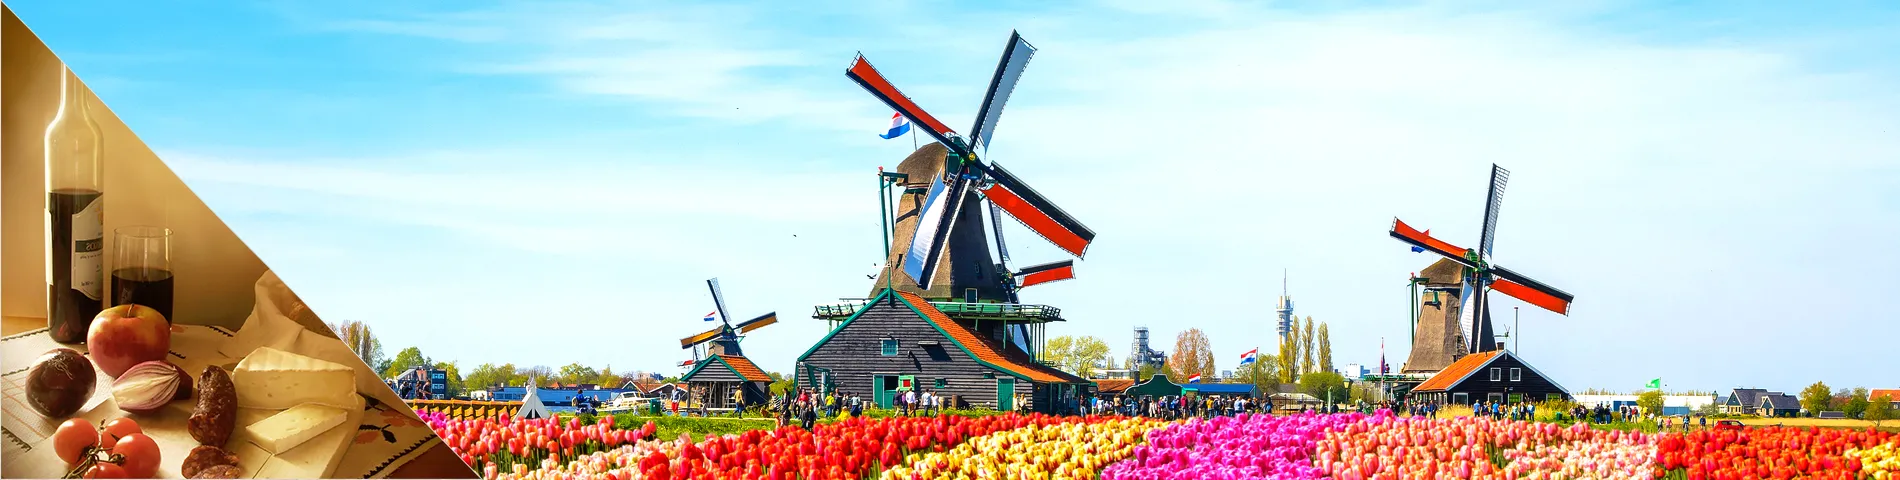 Paesi Bassi - Olandese & Cultura